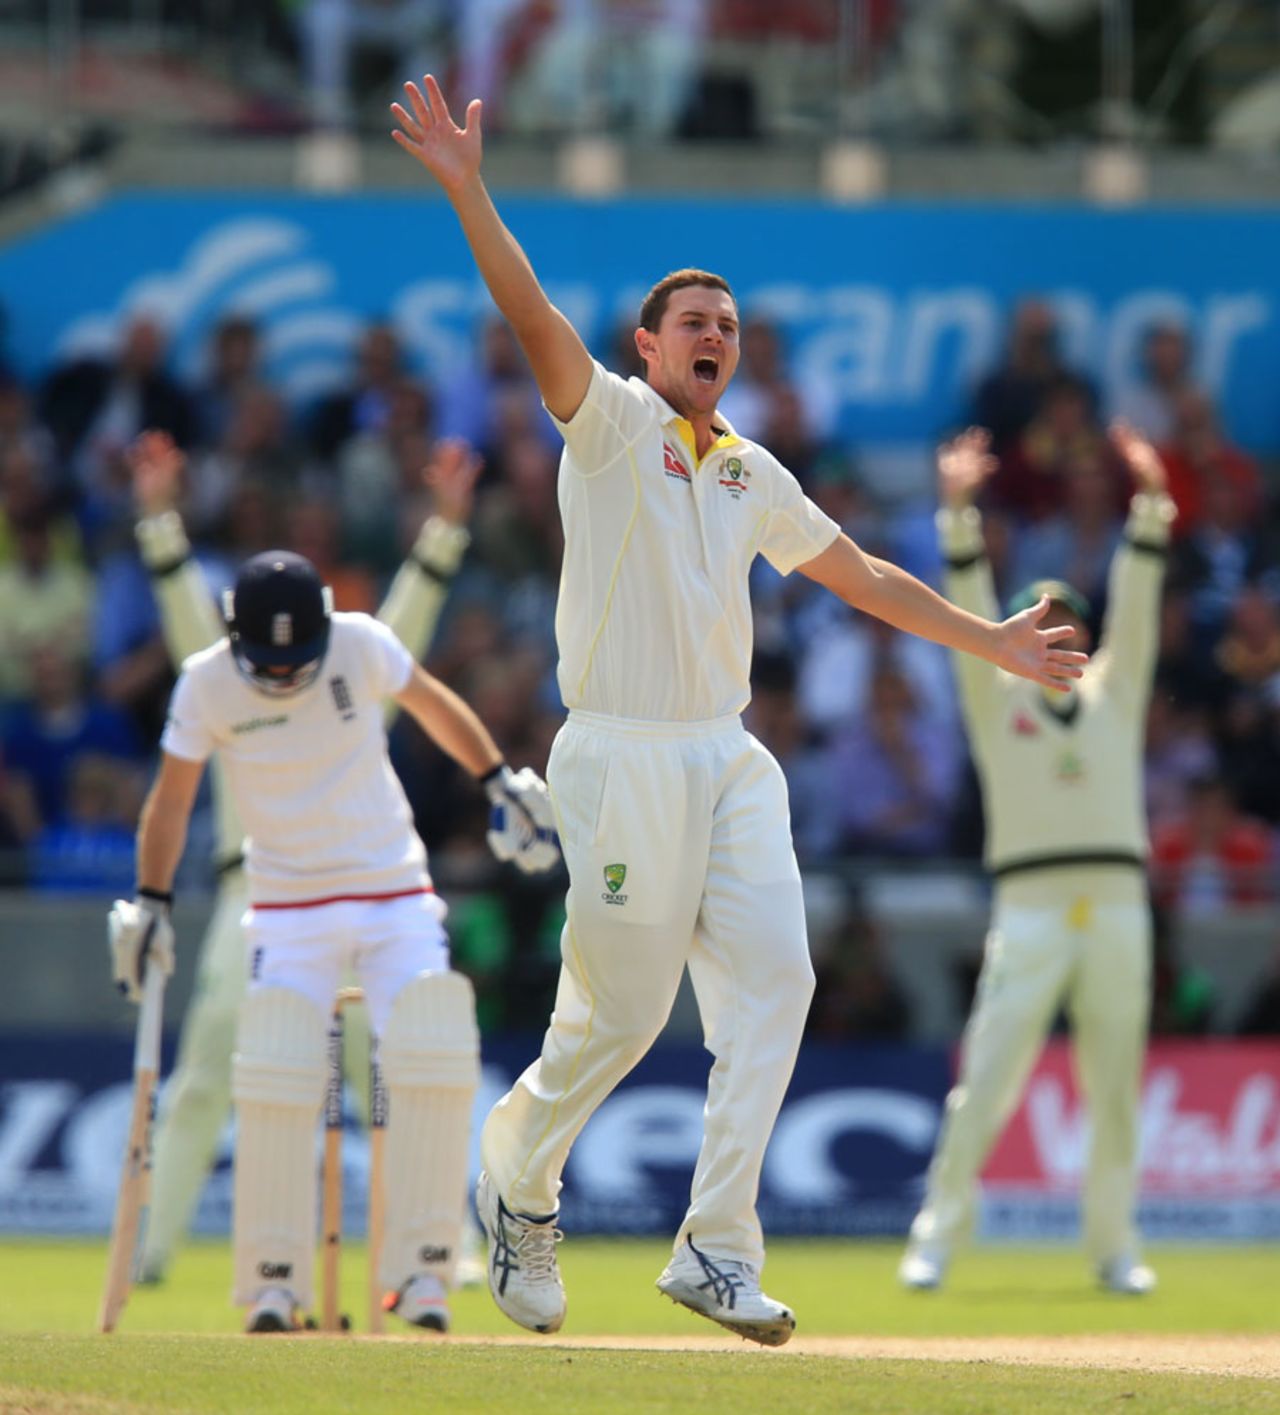 Josh Hazlewood removed Adam Lyth cheaply, England v Australia, 3rd Test, Edgbaston, 3rd day, July 31, 2015